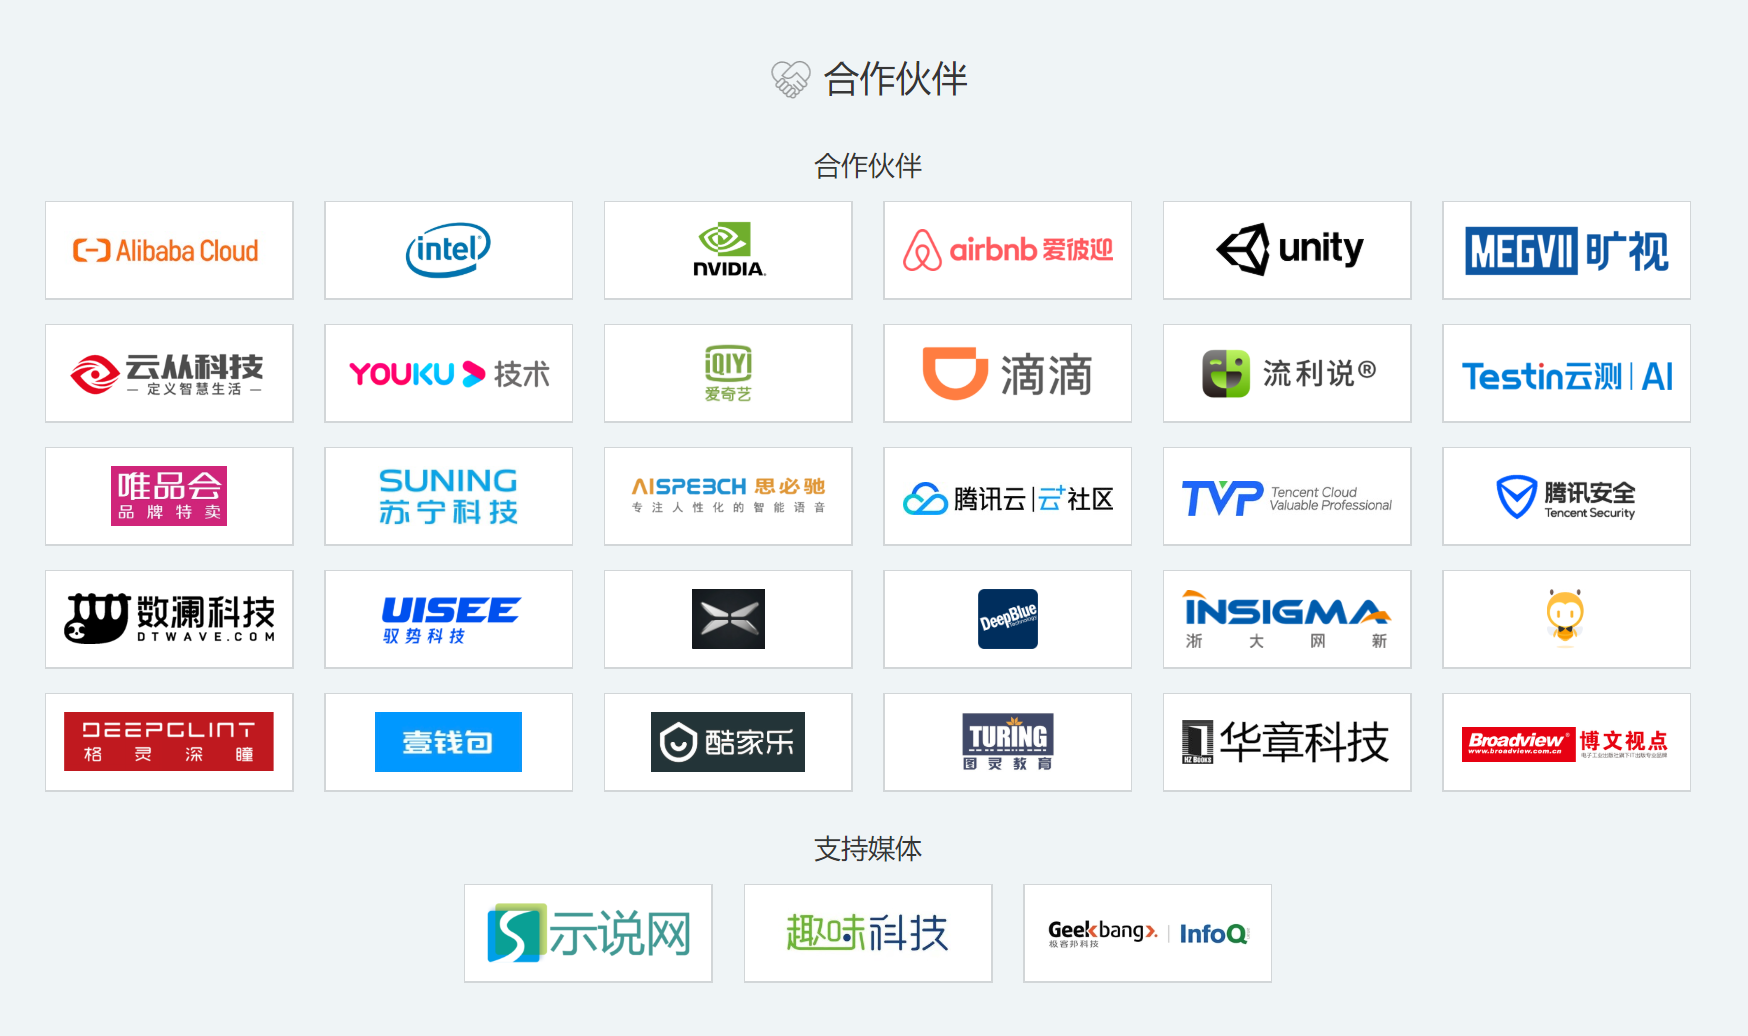 2019 AI先行者大会（AI Pioneer Conference 上海）